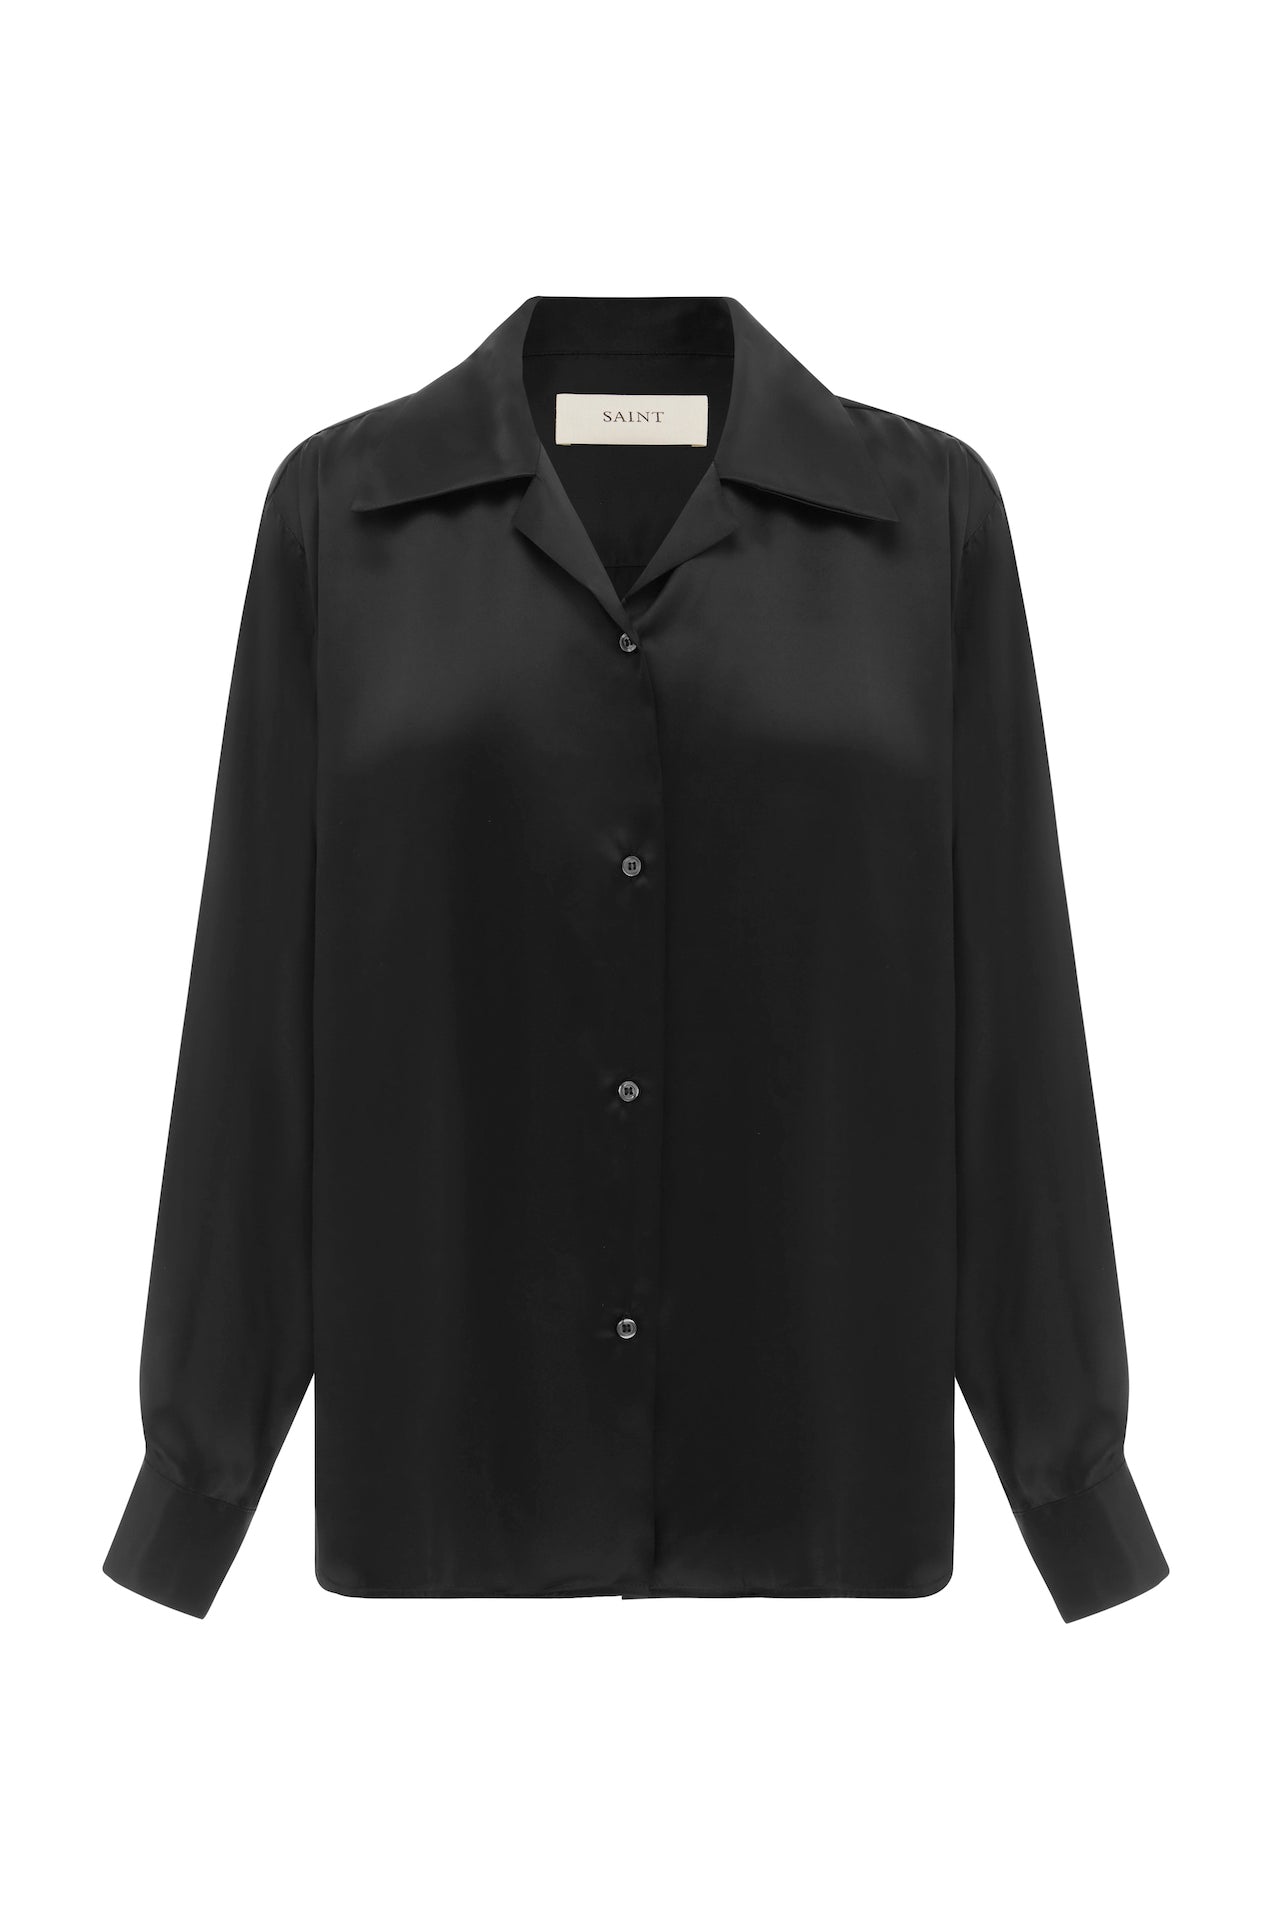 SAINT classic silk shirt in black pure silk. made in Australia. 100% silk satin